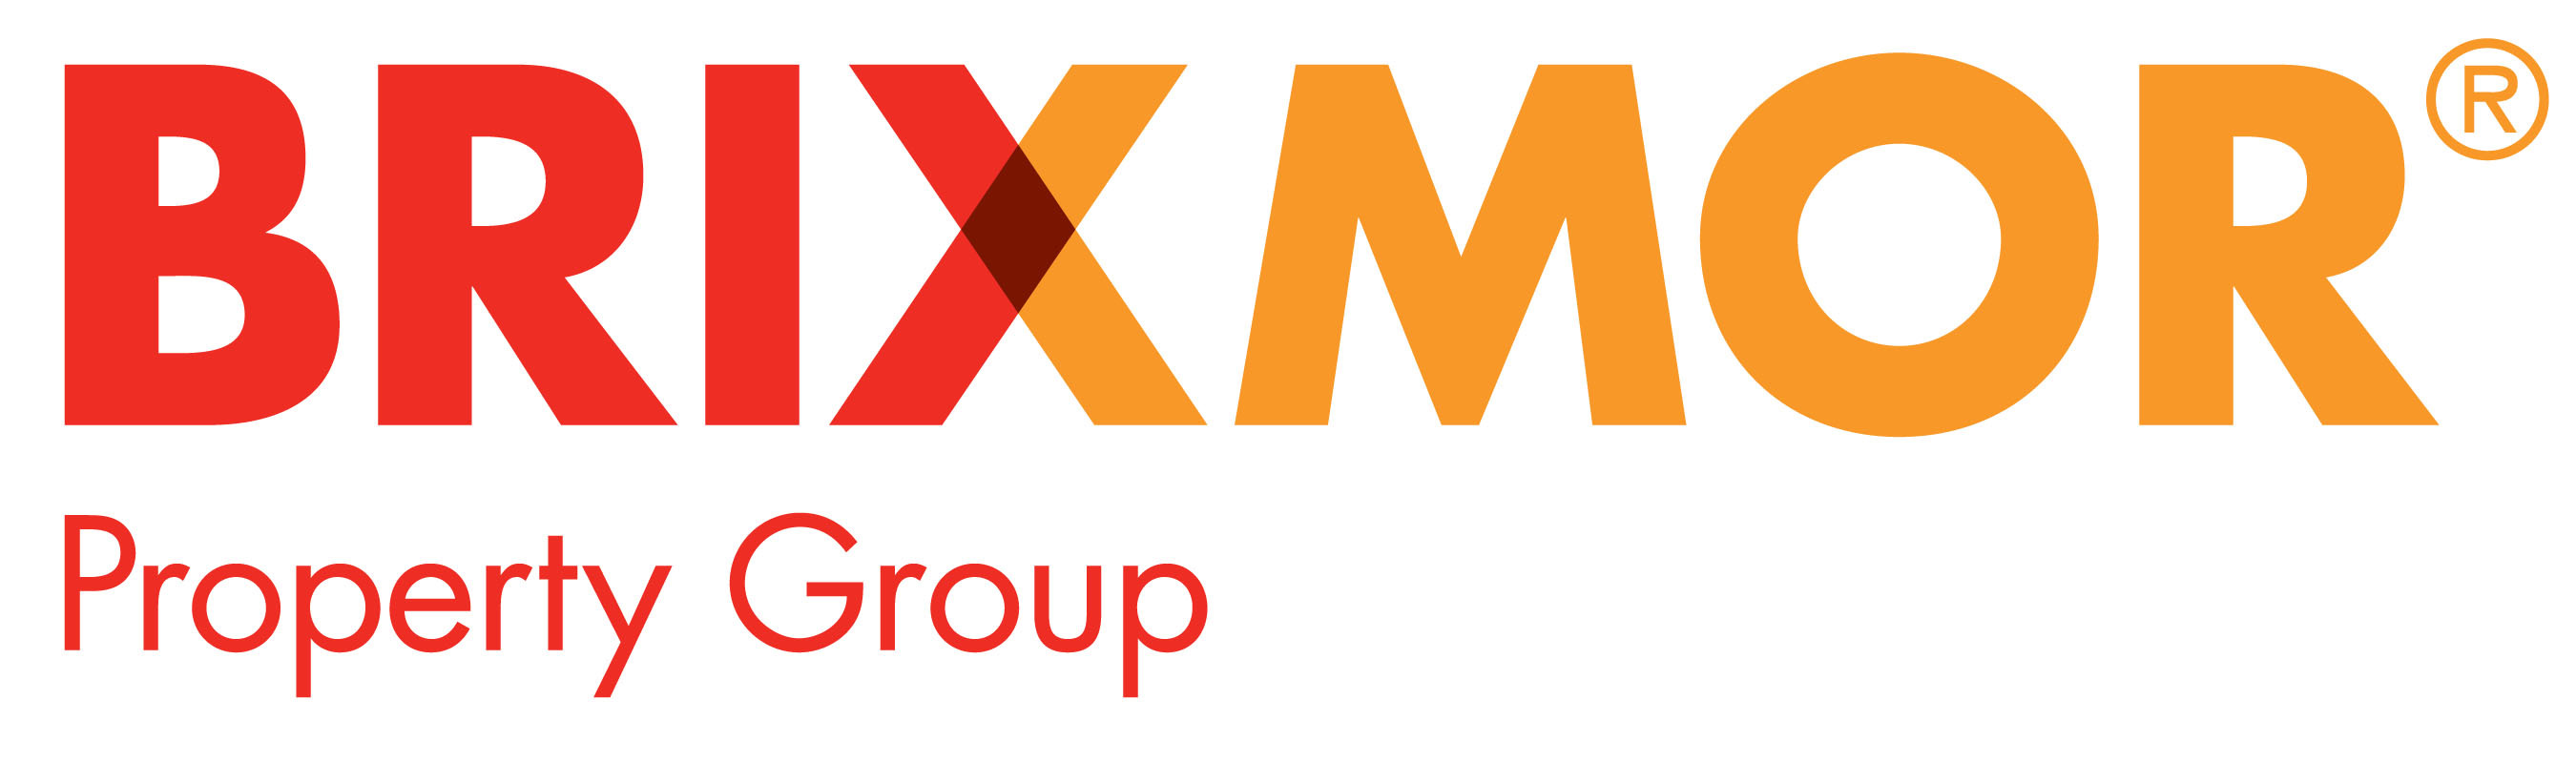 Brixmor Property Group Logo. (PRNewsFoto/Brixmor Property Group) (PRNewsFoto/)